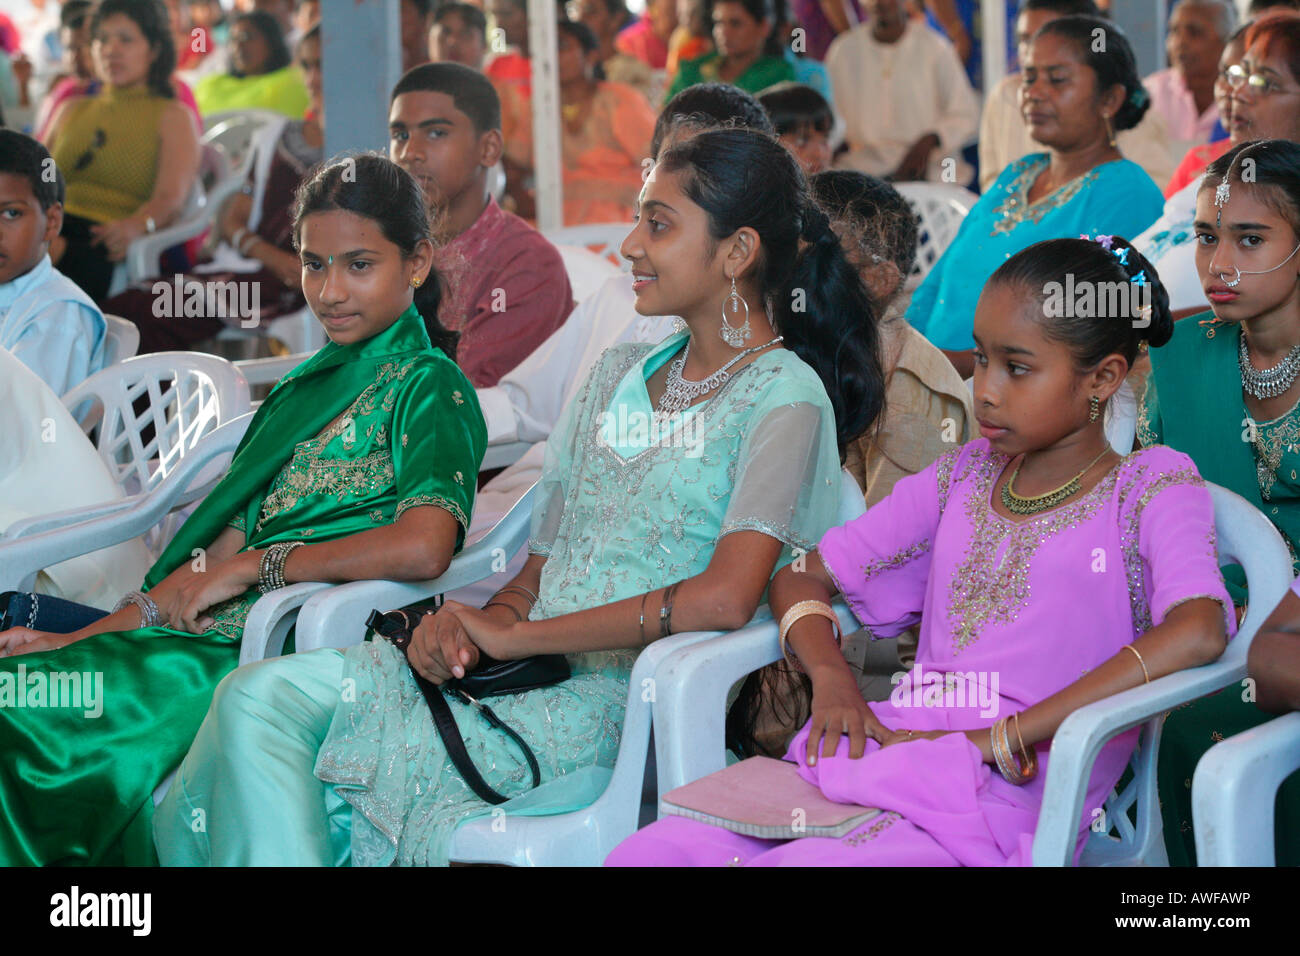 Le ragazze di etnia indiana presso un festival indù, Georgetown, Guyana, Sud America Foto Stock